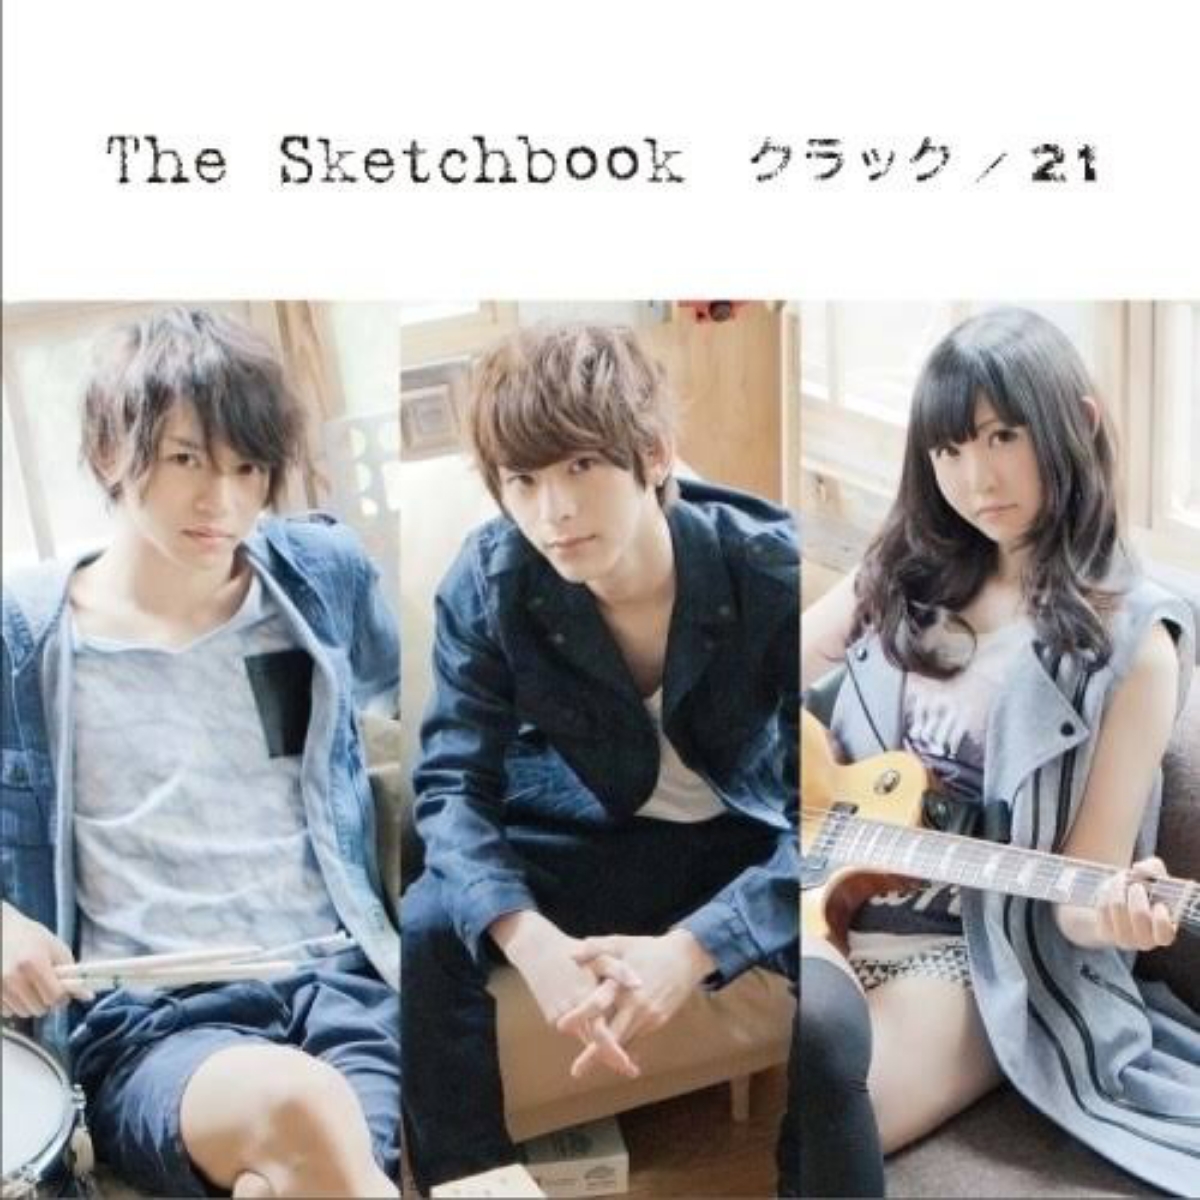 The Sketchbook - 21